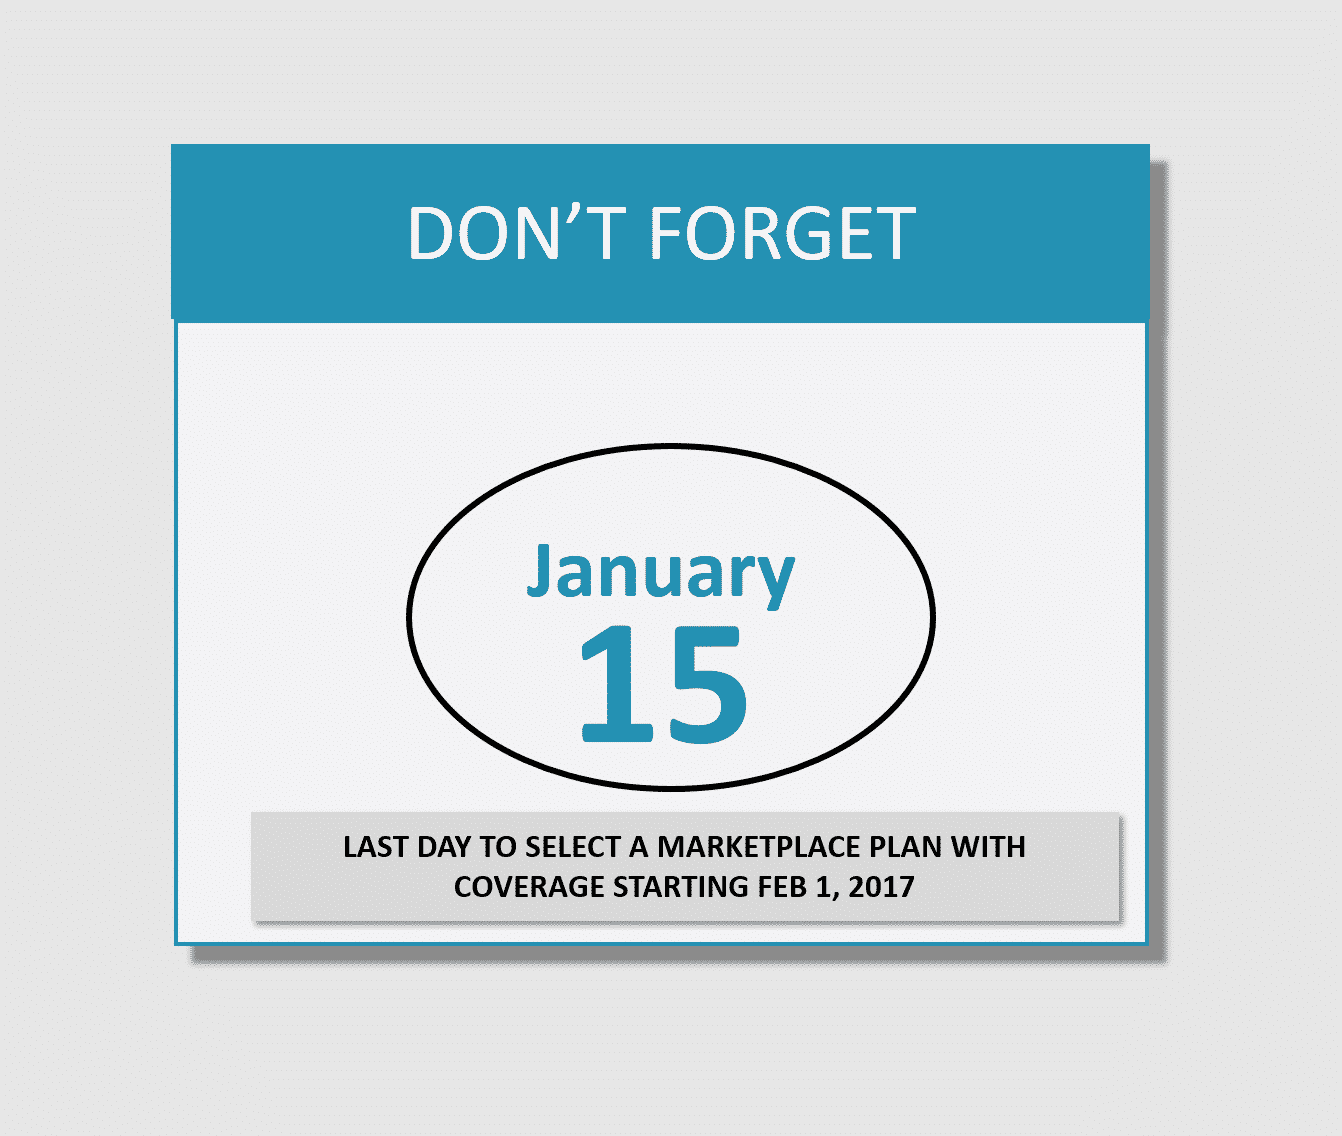 2nd Health Insurance Deadline = January 15 (for a February 1 Start Date)